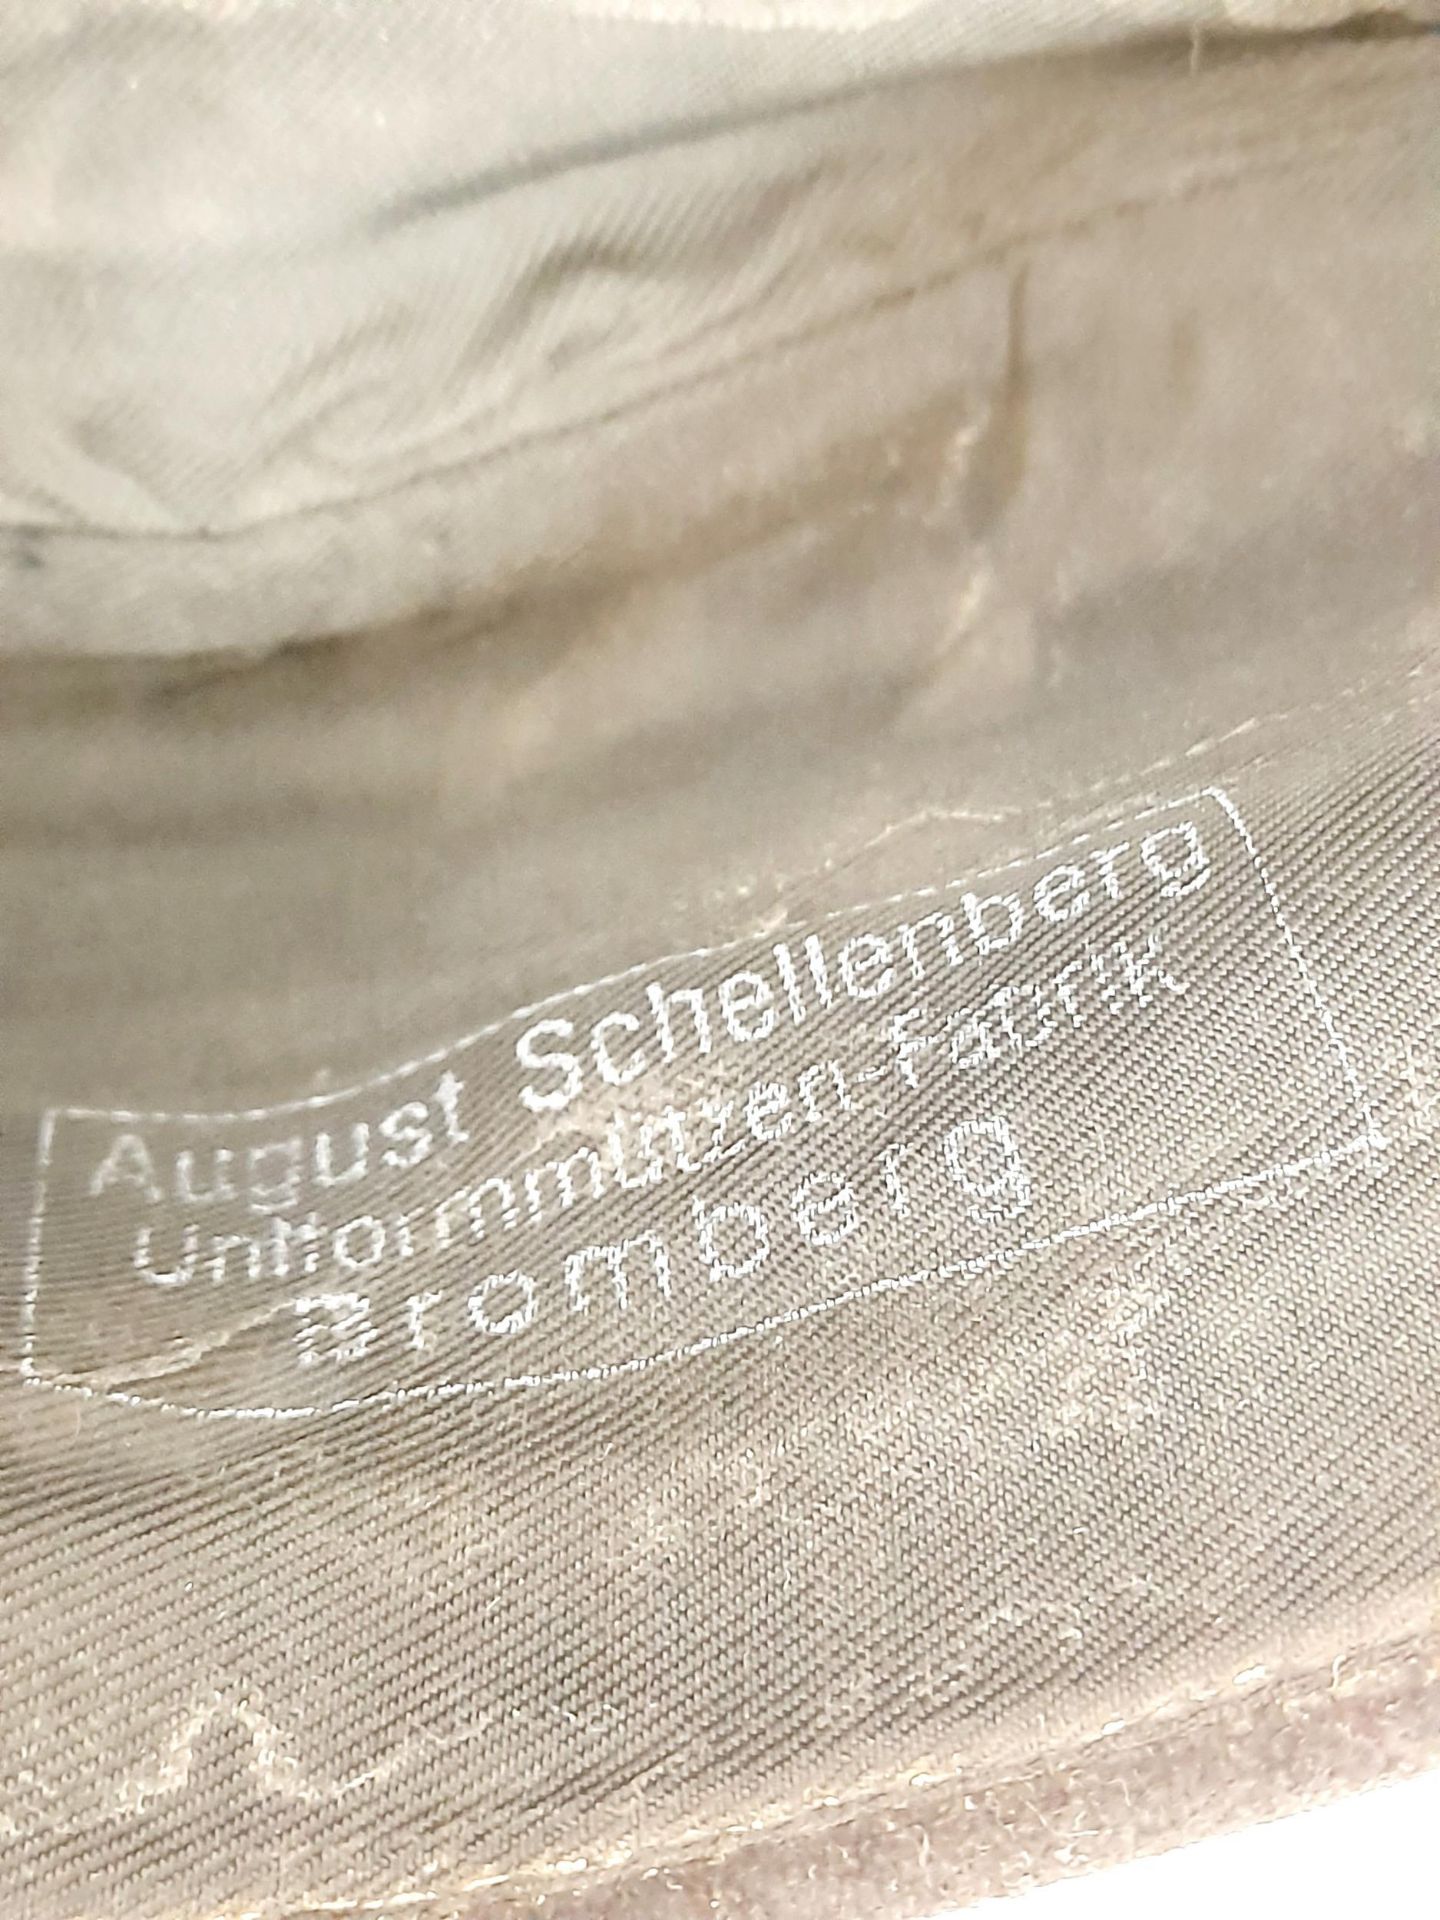 WW2 German Panzer Crew (pink soutache) Overseas Side Cap. Makers stamped “August Schellenberg” - Bild 6 aus 7